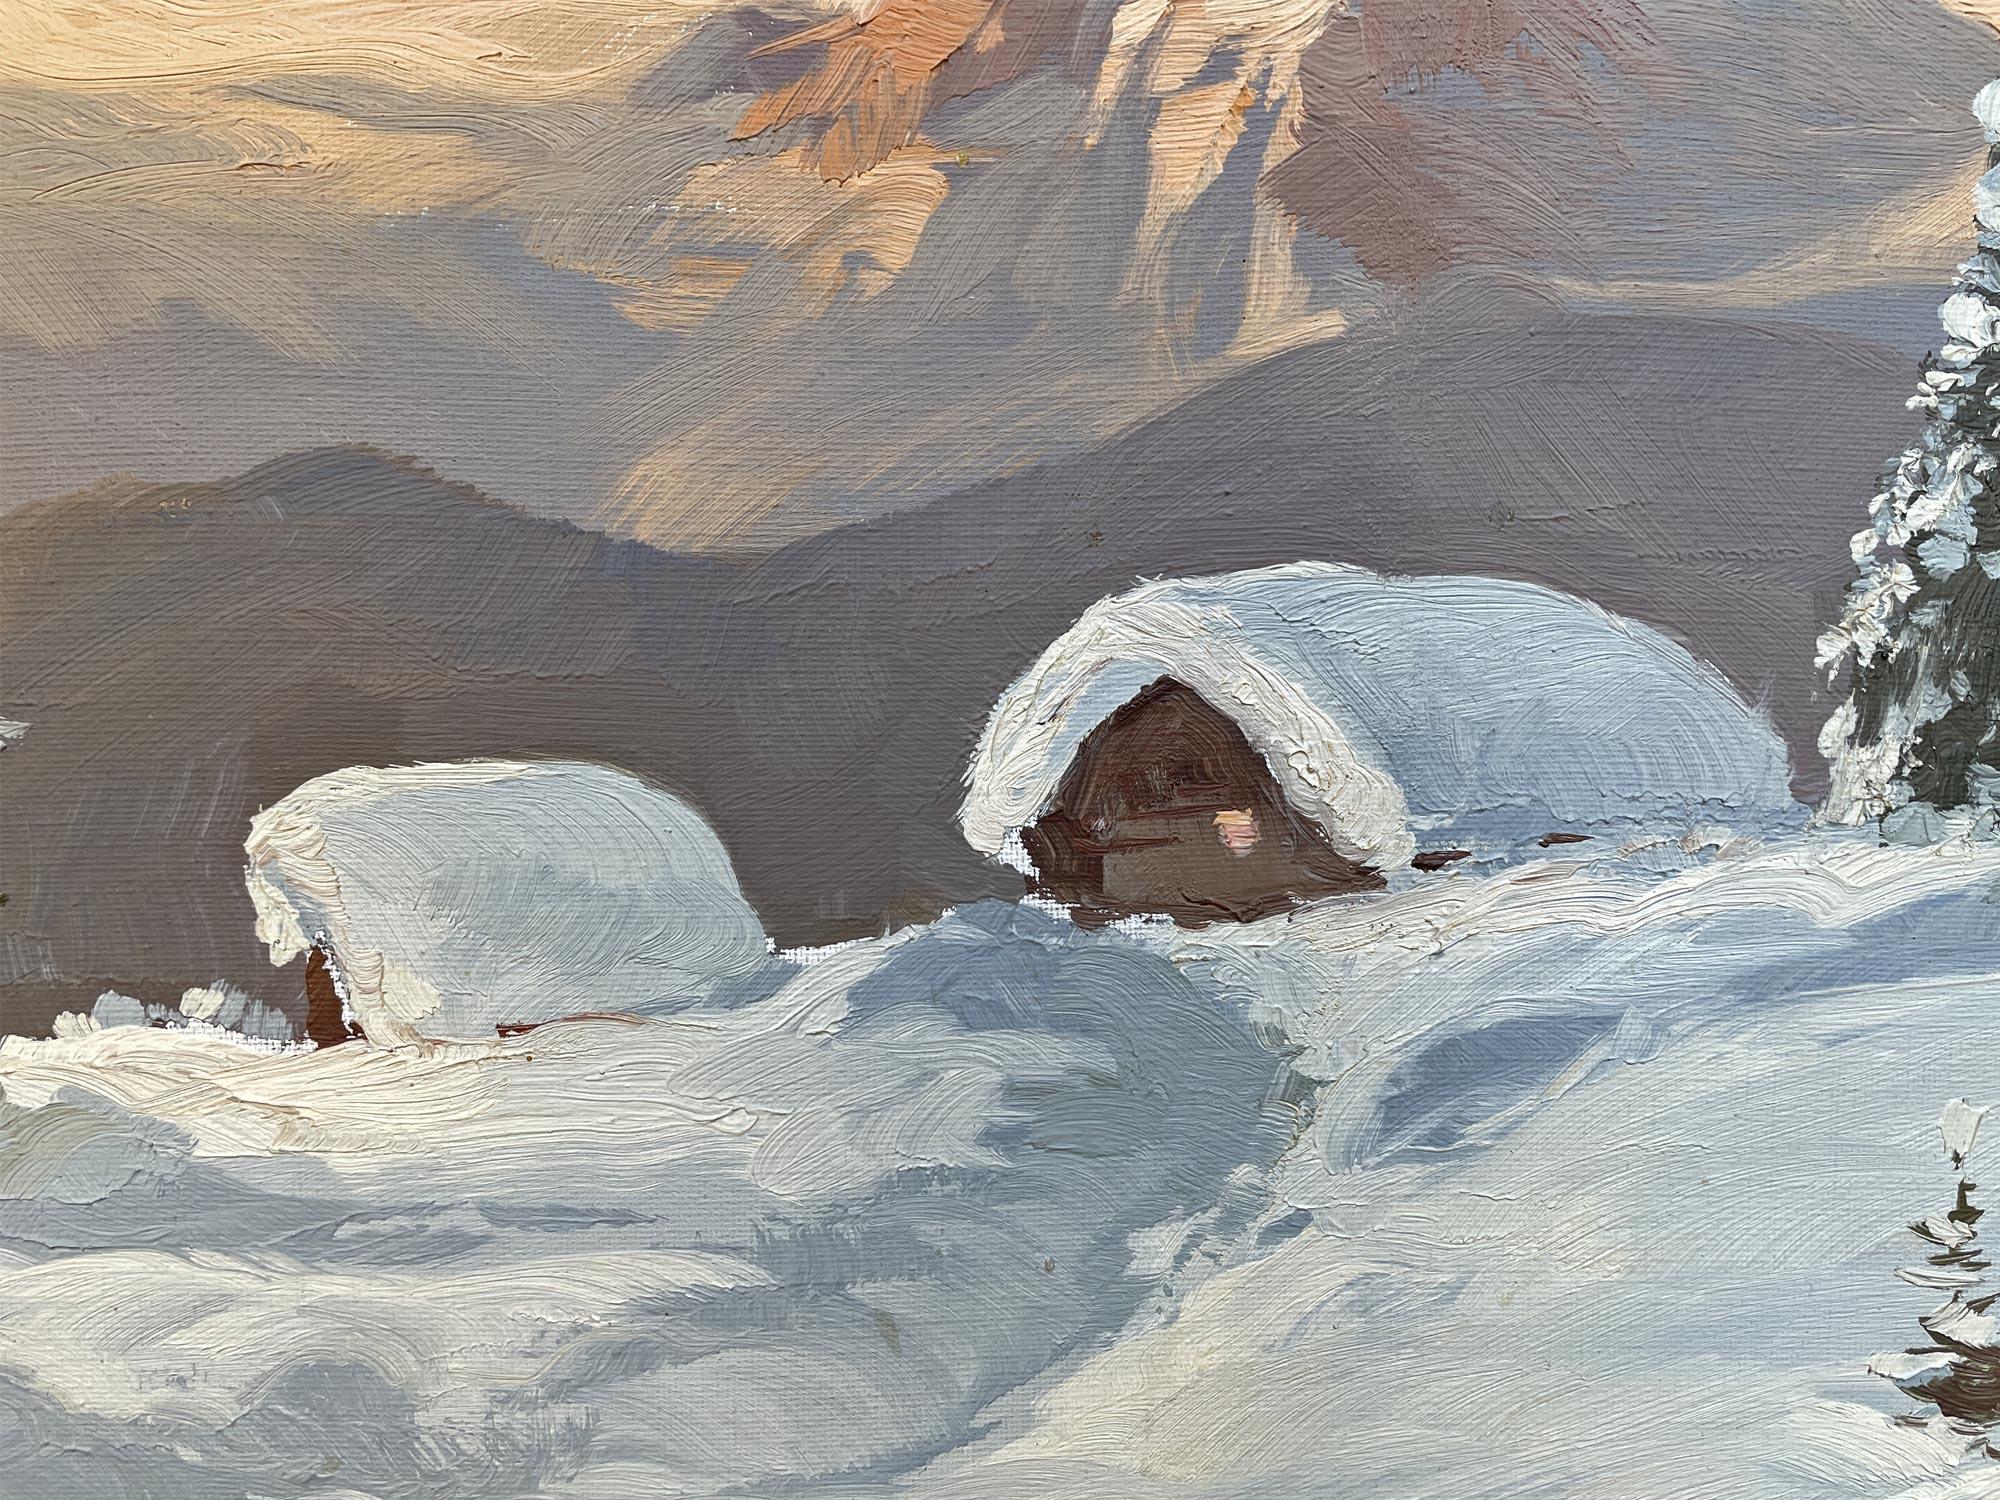 Hans Grabner, Snowy Landscape at Twilight Oil on Canvas 2